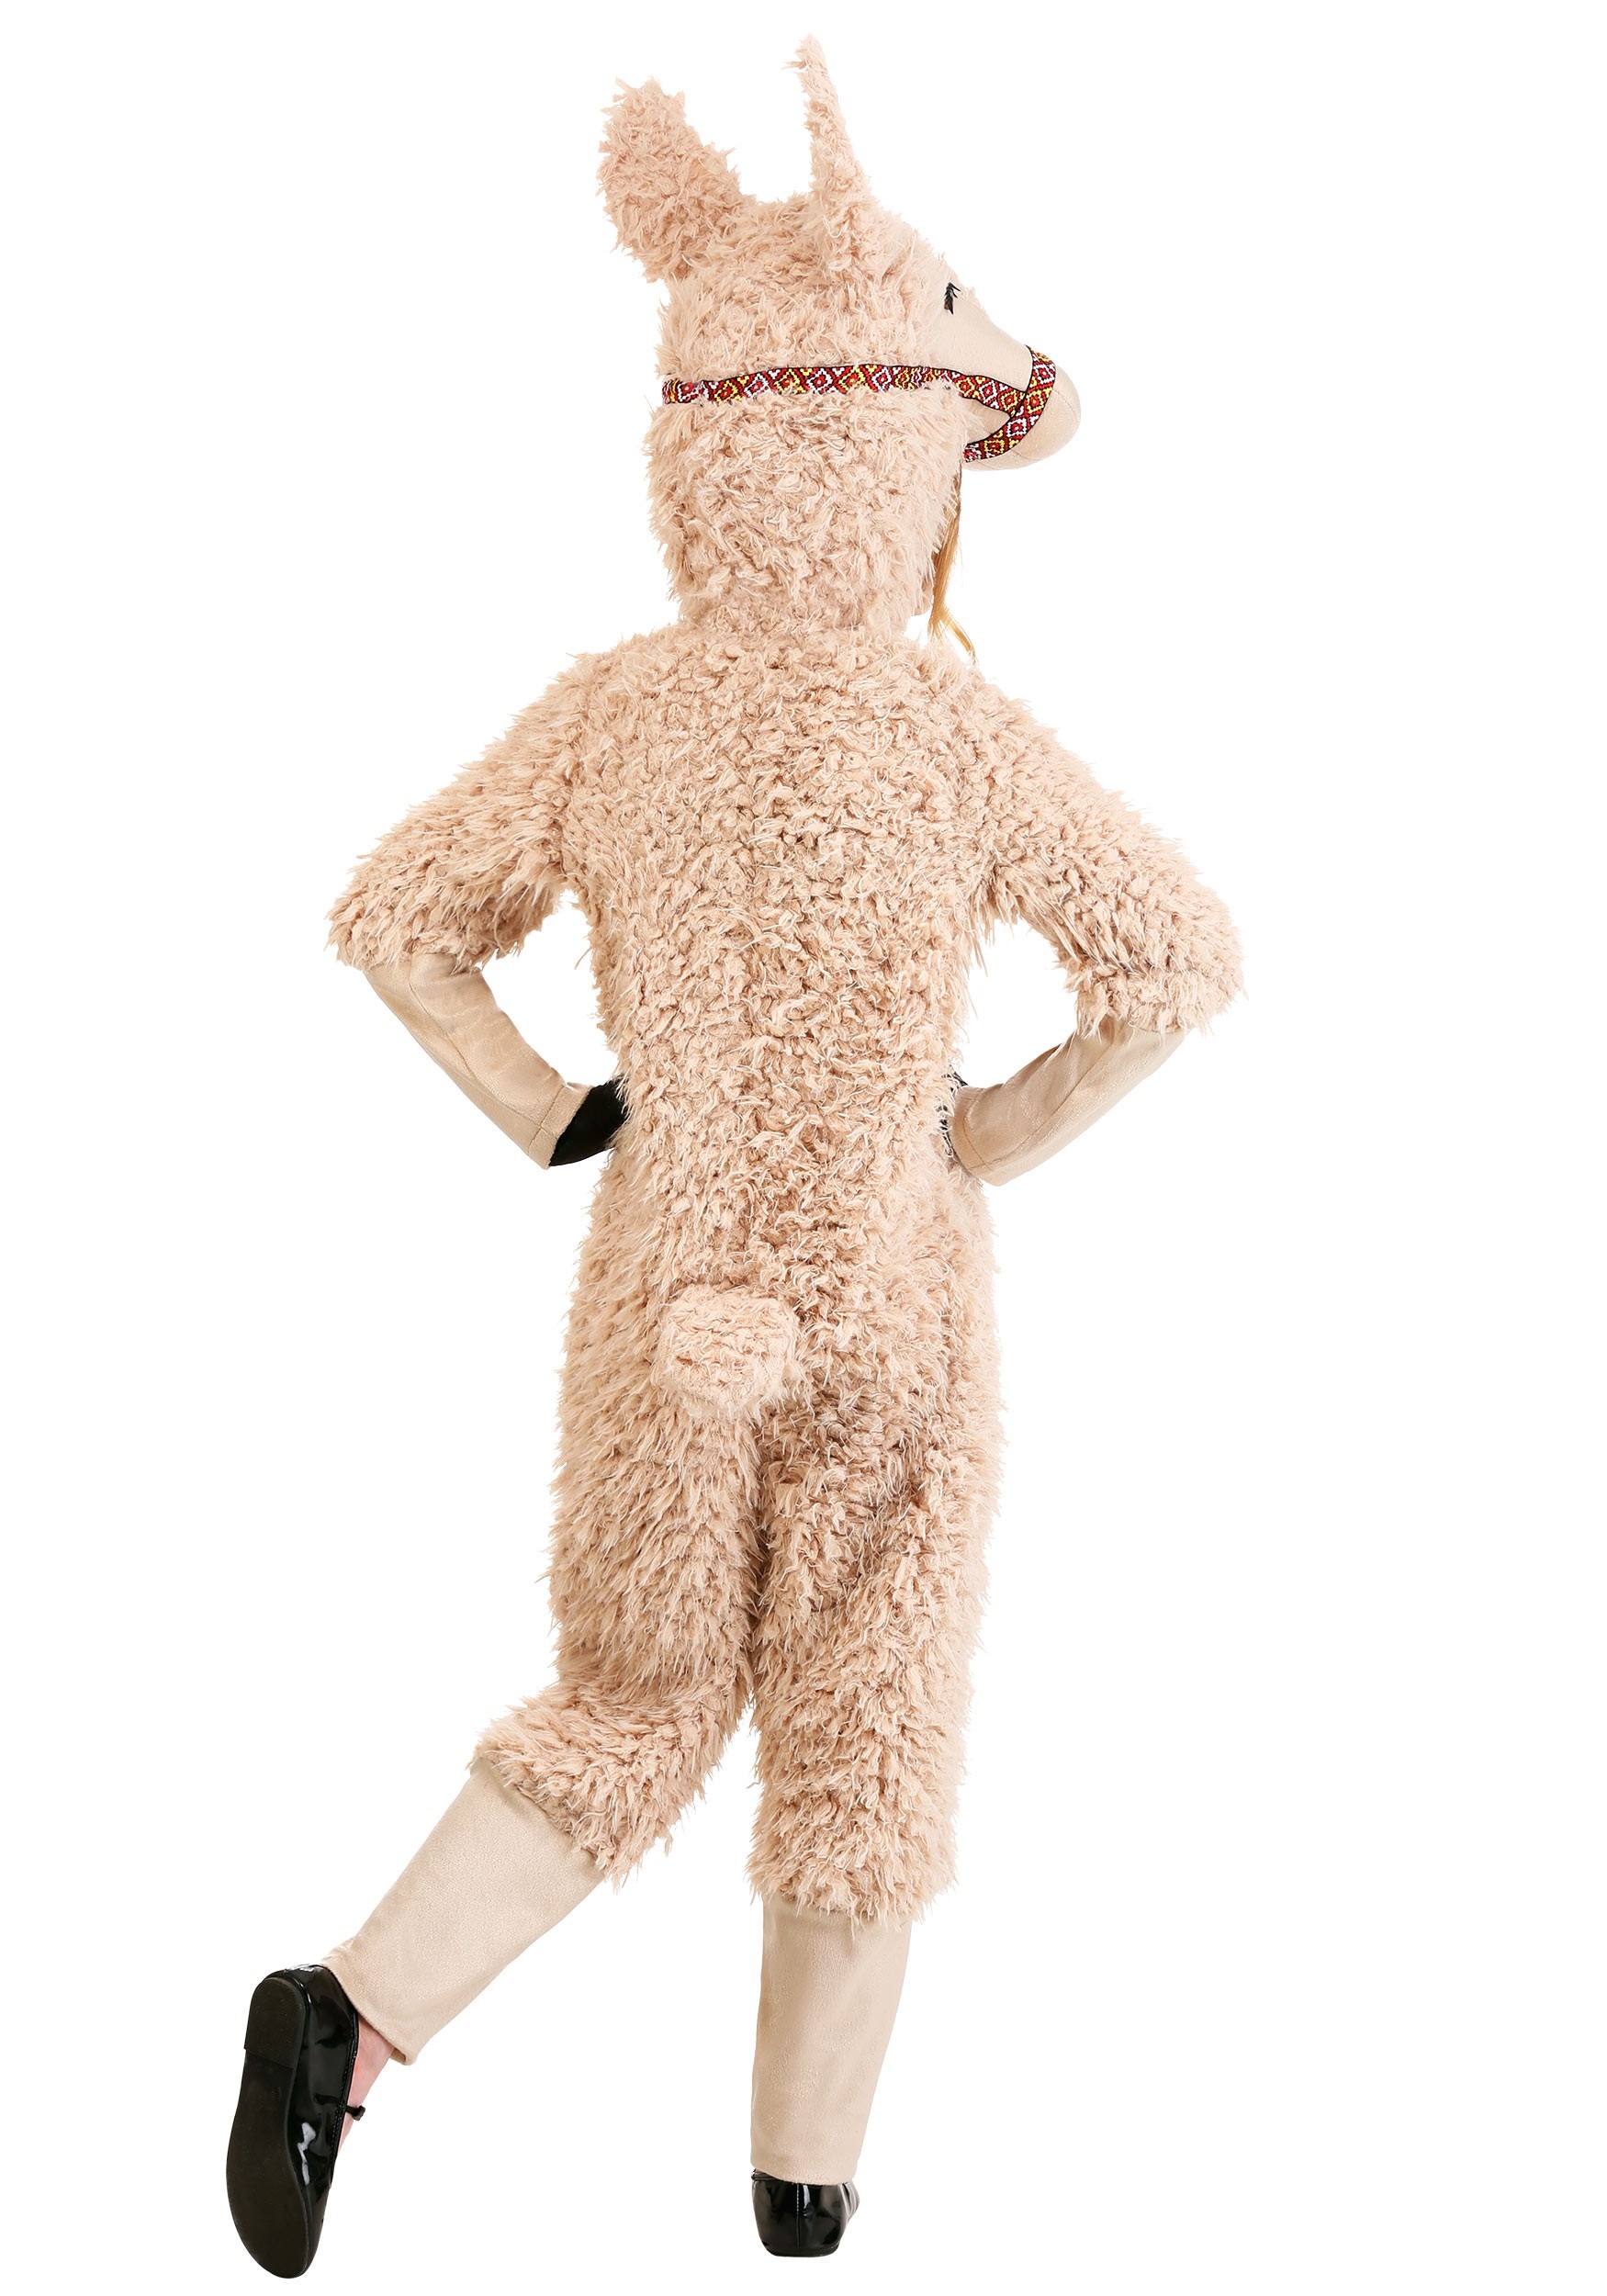 Llama Costume For Kids